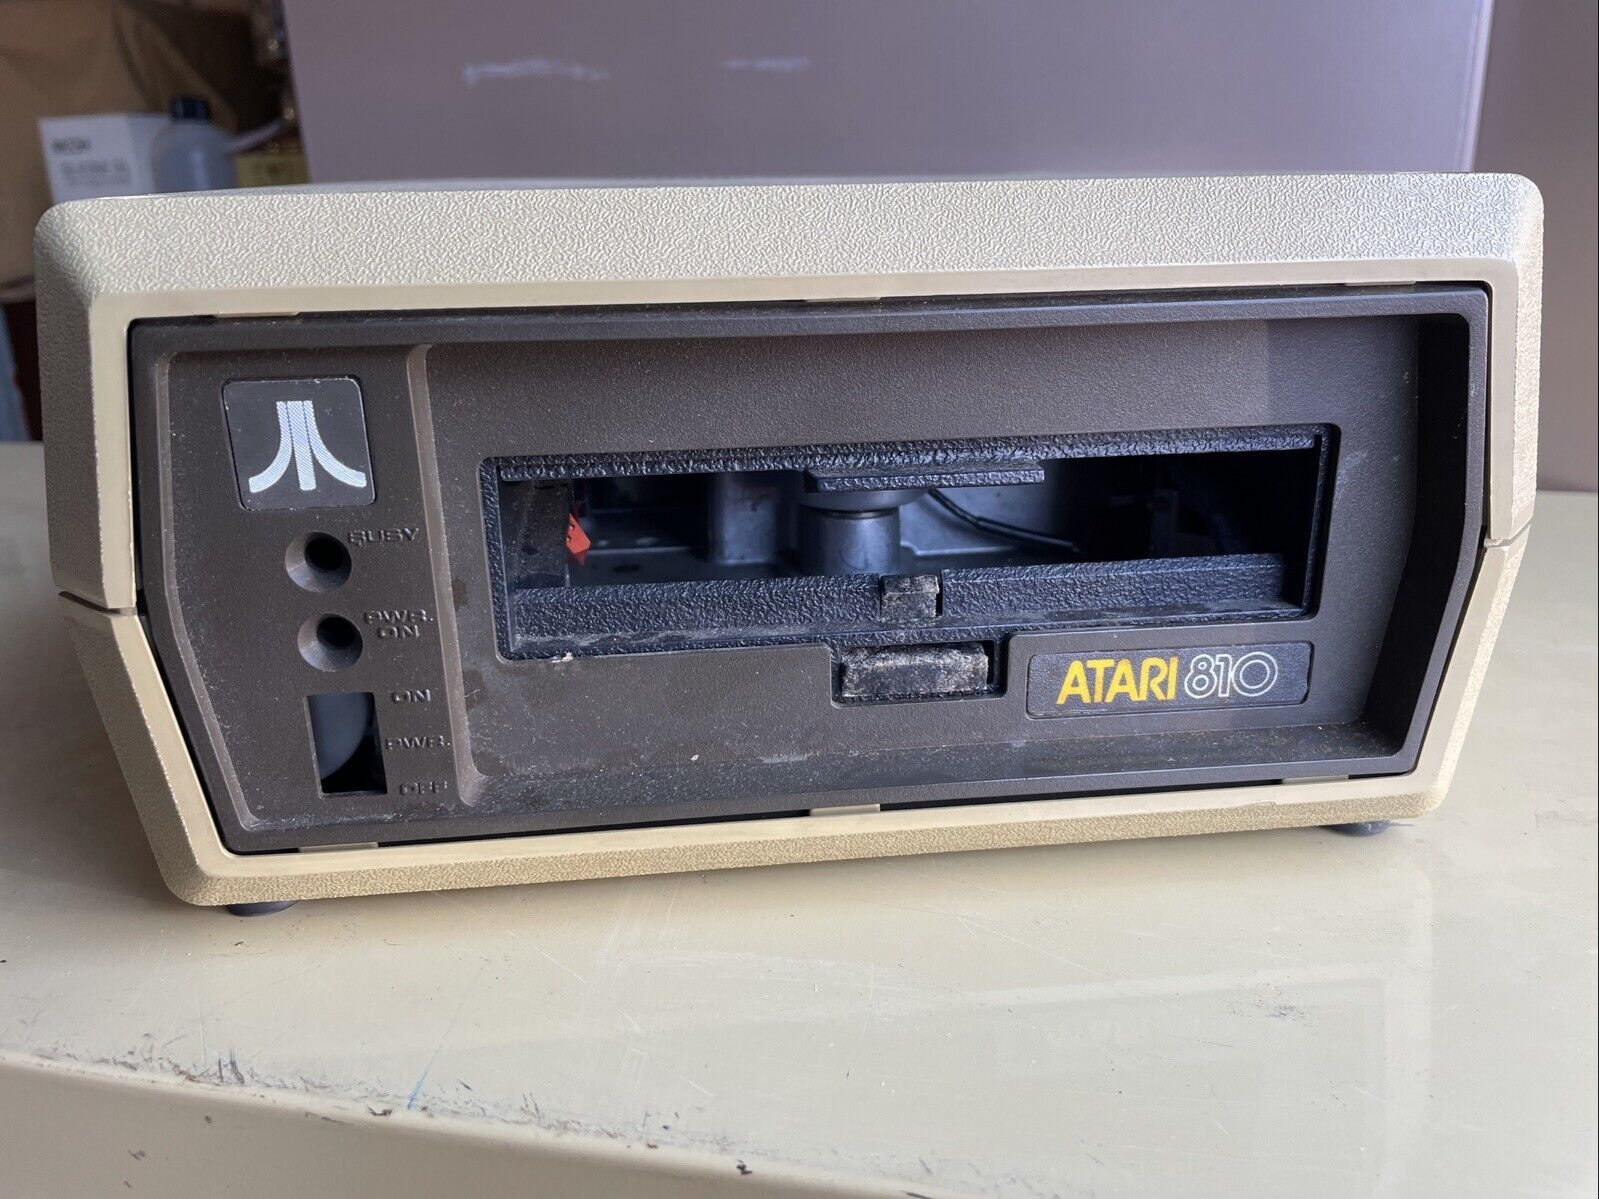 Atari 810 Floppy Disk Drive for Atari 8-bit Computer FOR PARTS As-Is No PSU